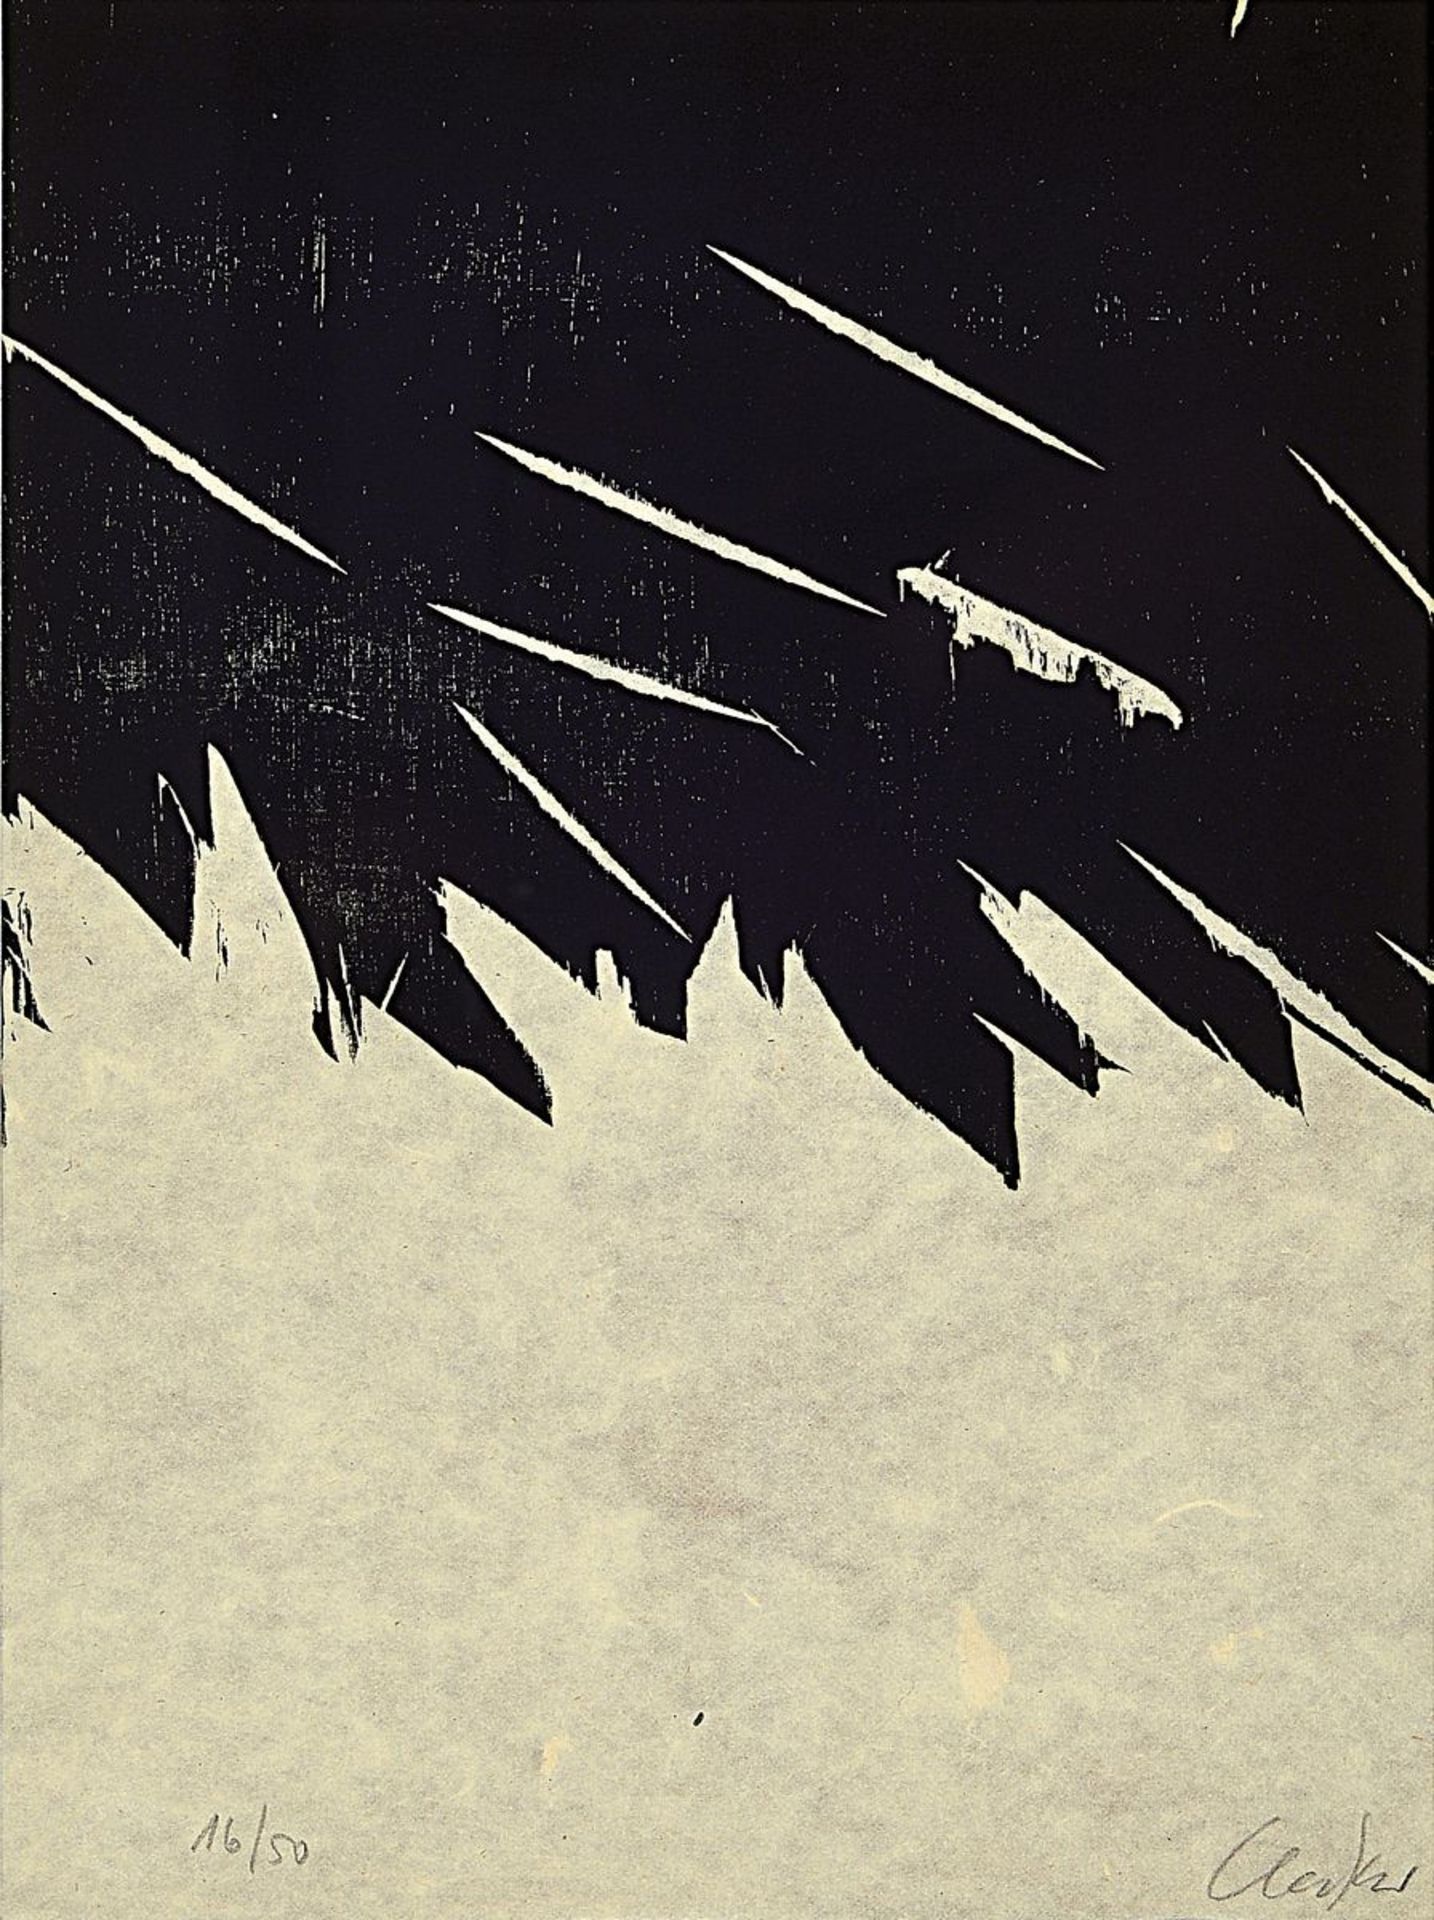 Günther Uecker, born 1930, woodcut on fine handmade Japan handmade paper, signed by hand,num. 16/50,